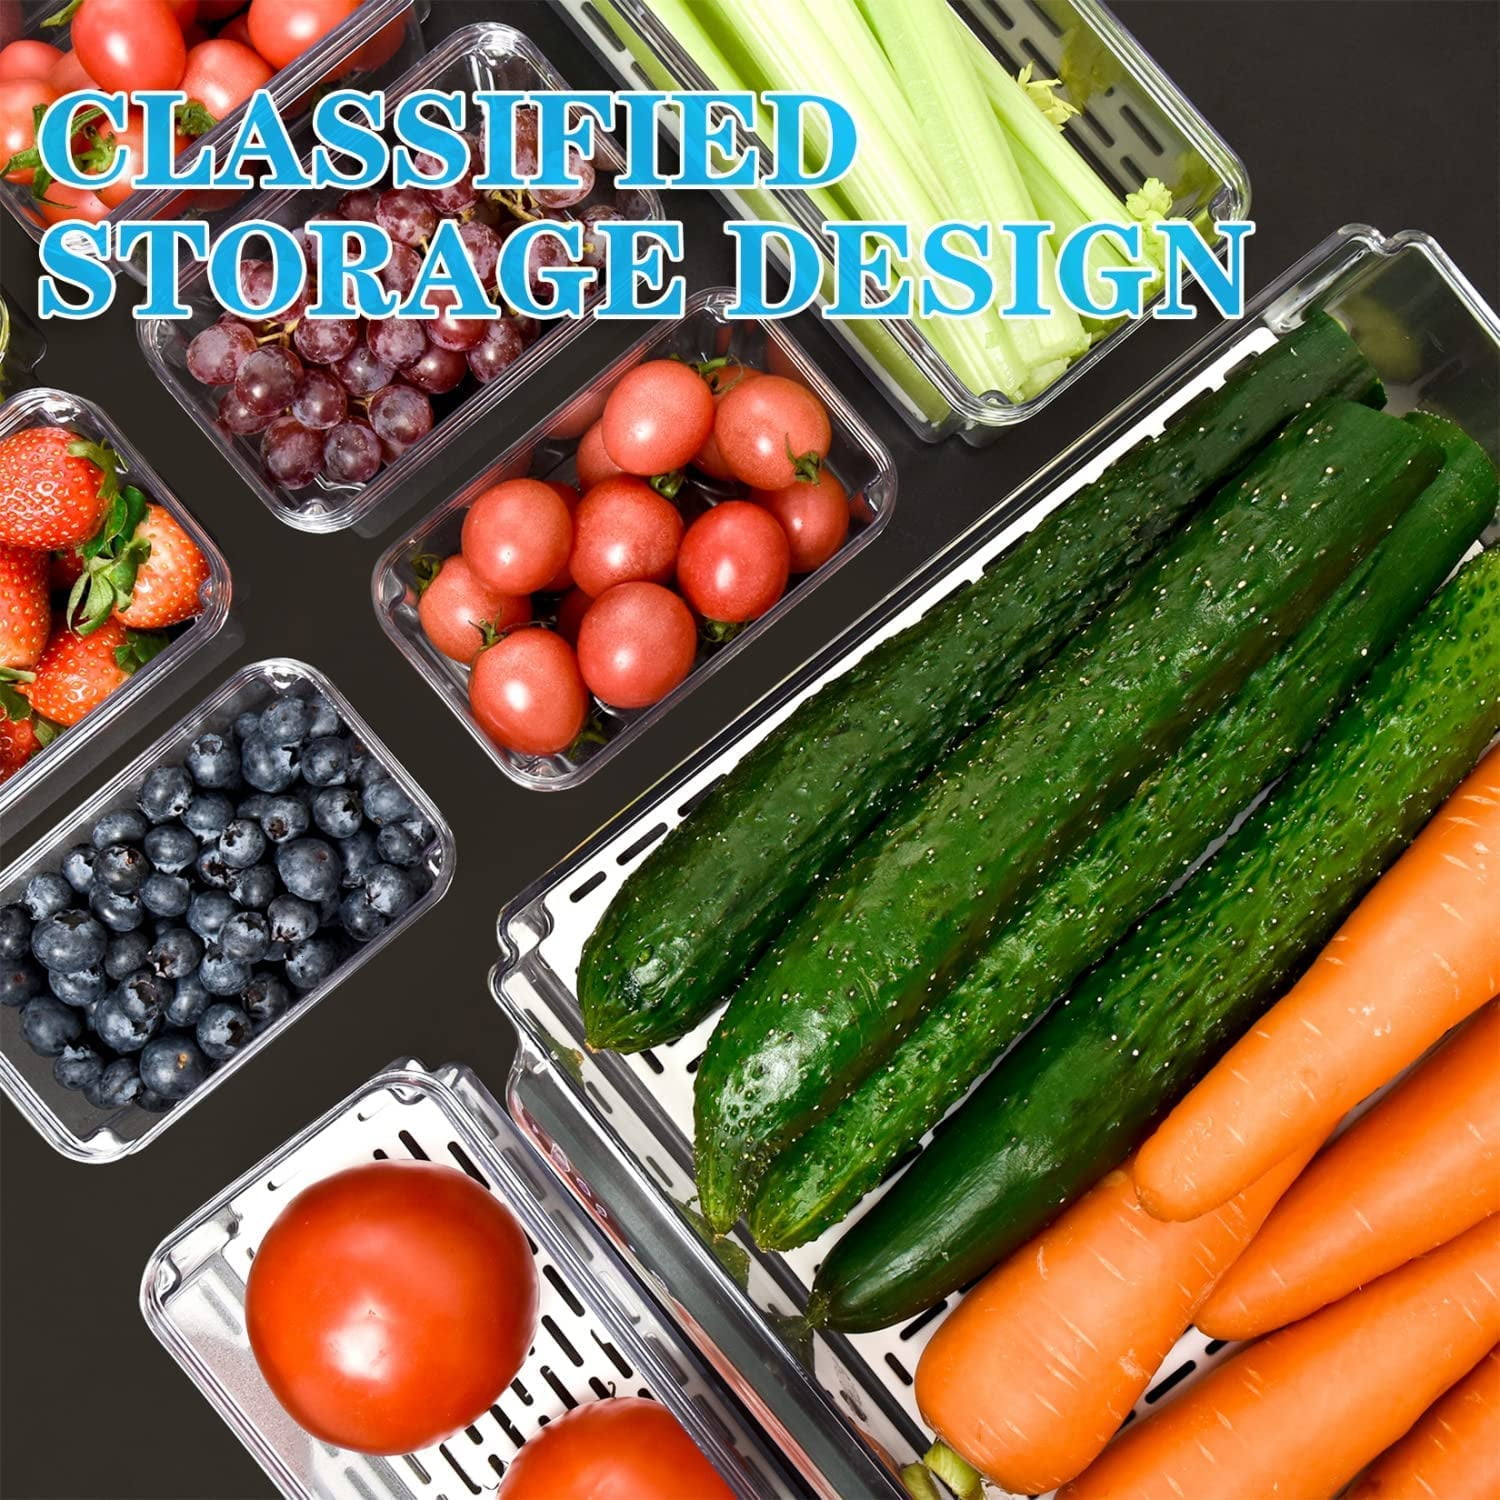 Raweao Refrigerator Organizer Bins - 6 Pack Fridge Organizers and Storage Clear, Three Size Clear Stackable Storage Bins for Pantry, Freezer